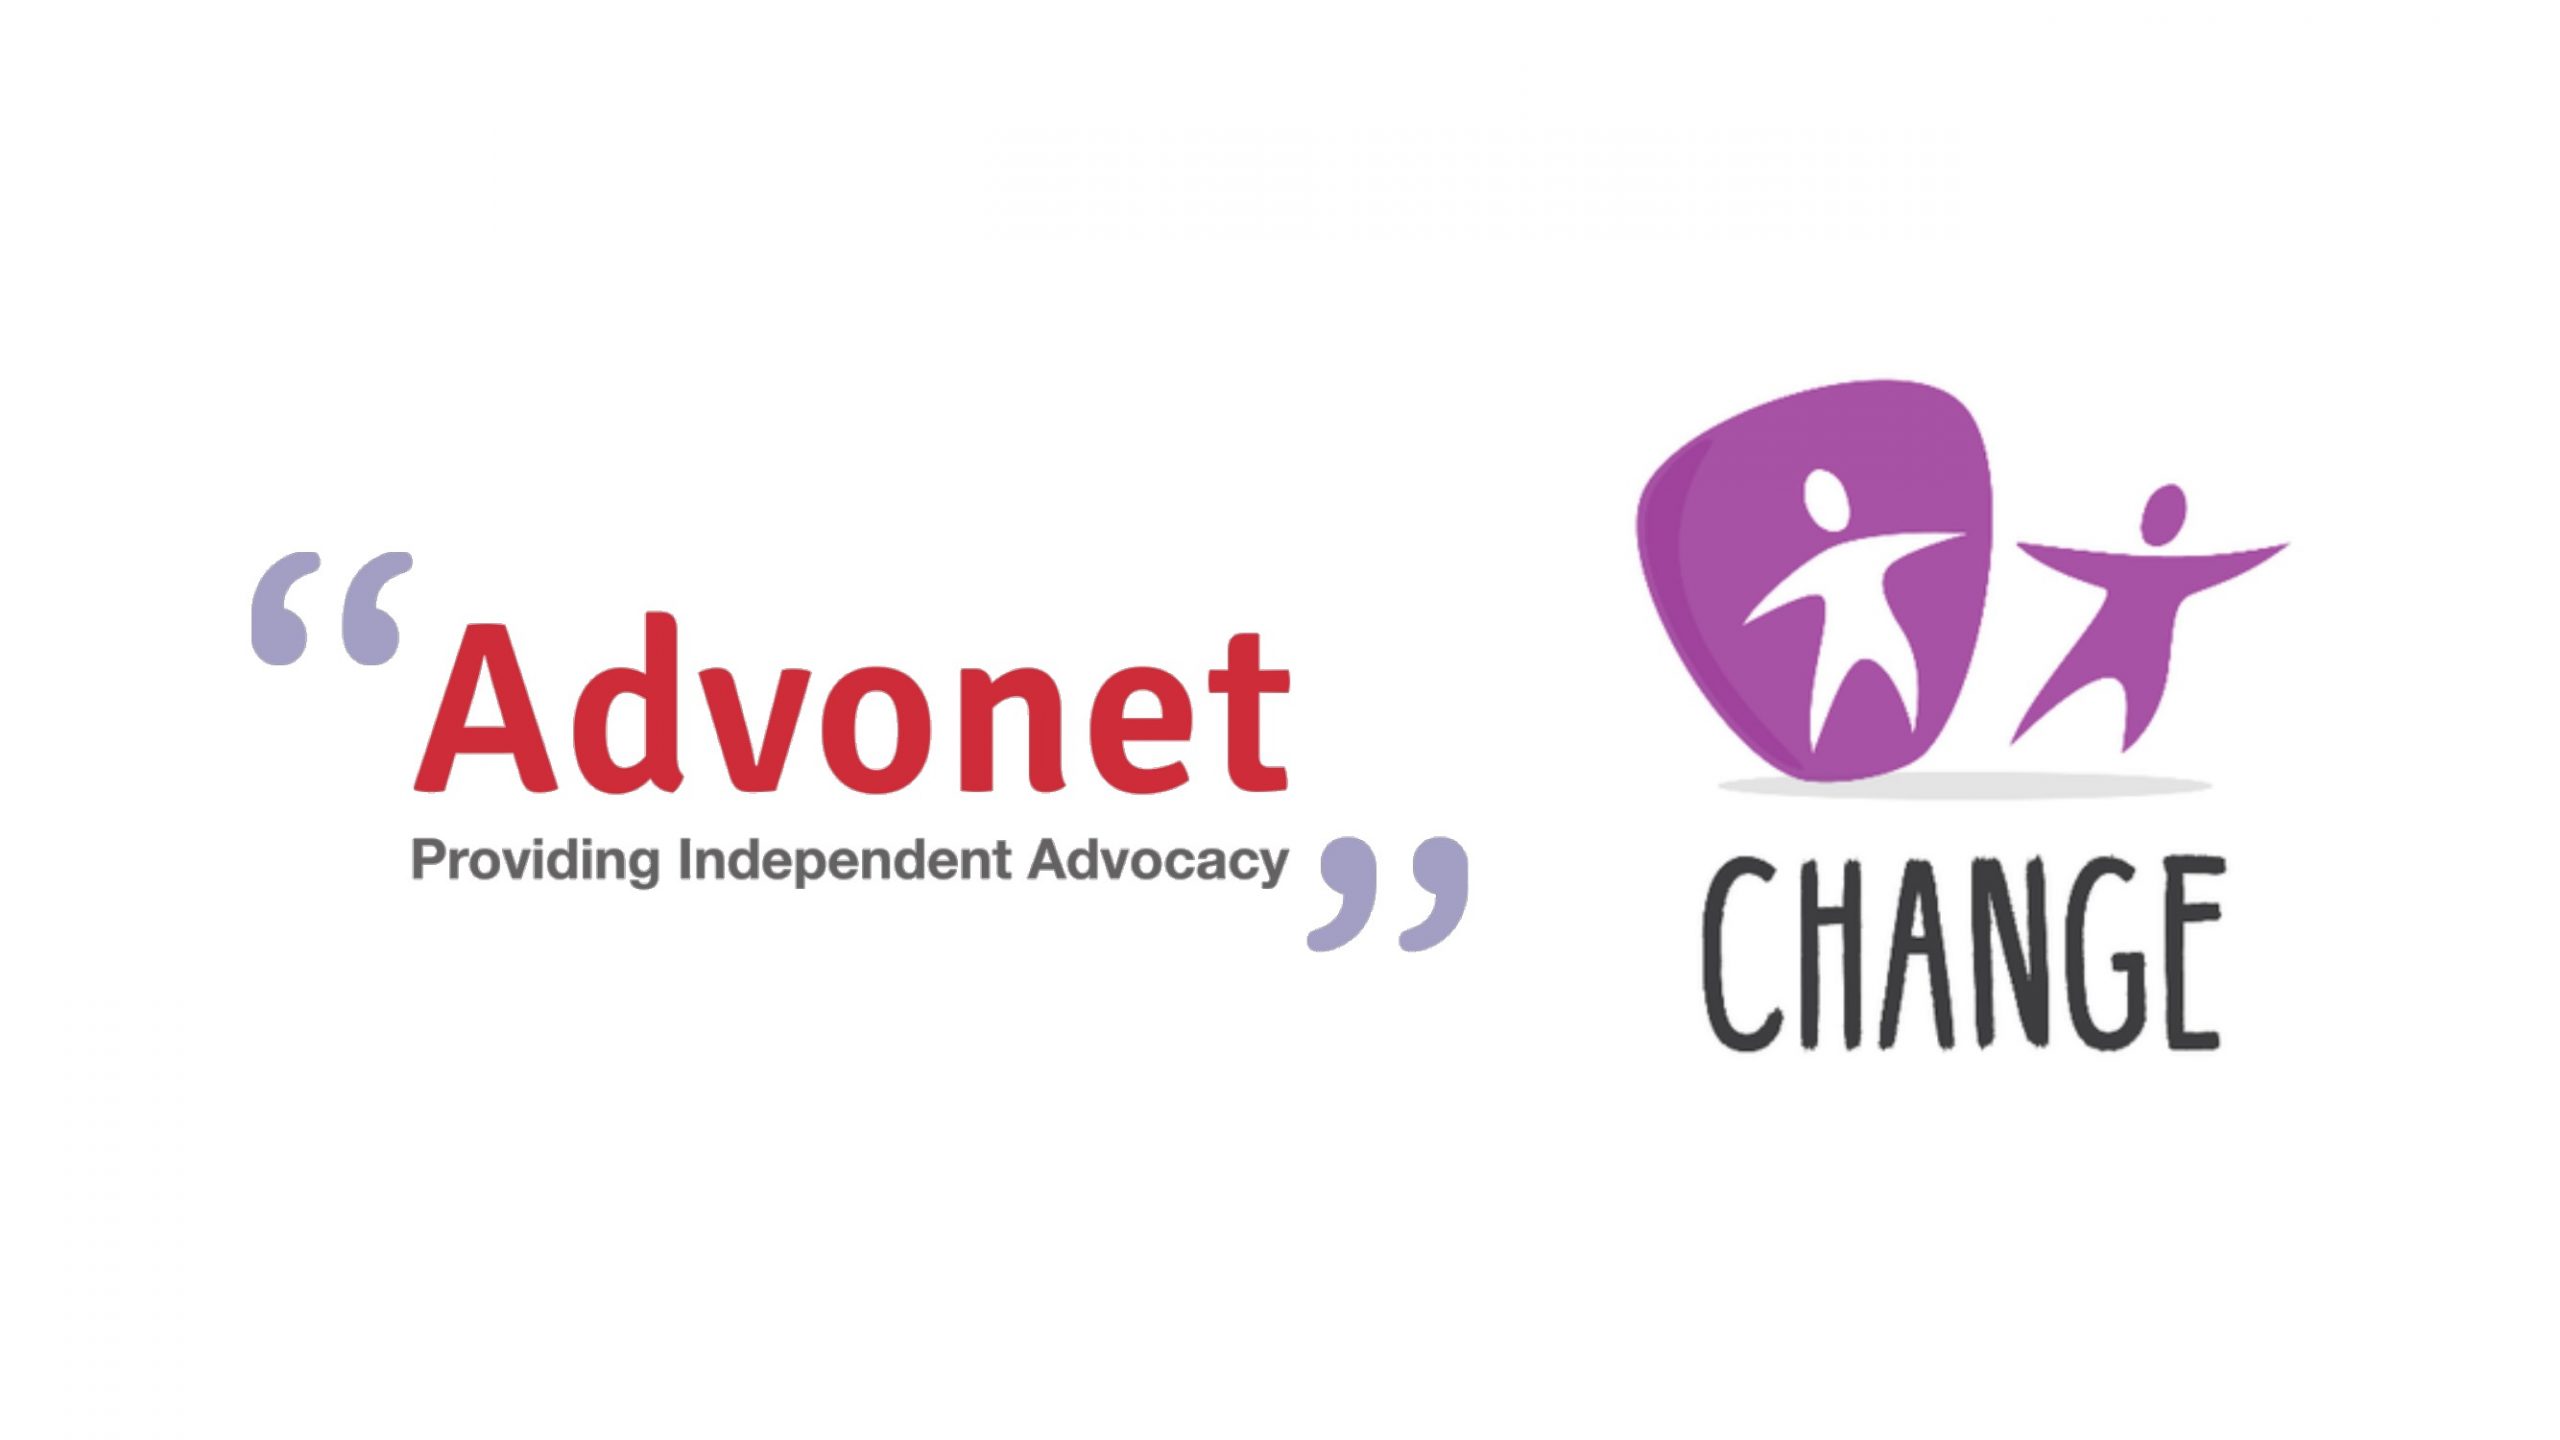 Advonet and CHANGE